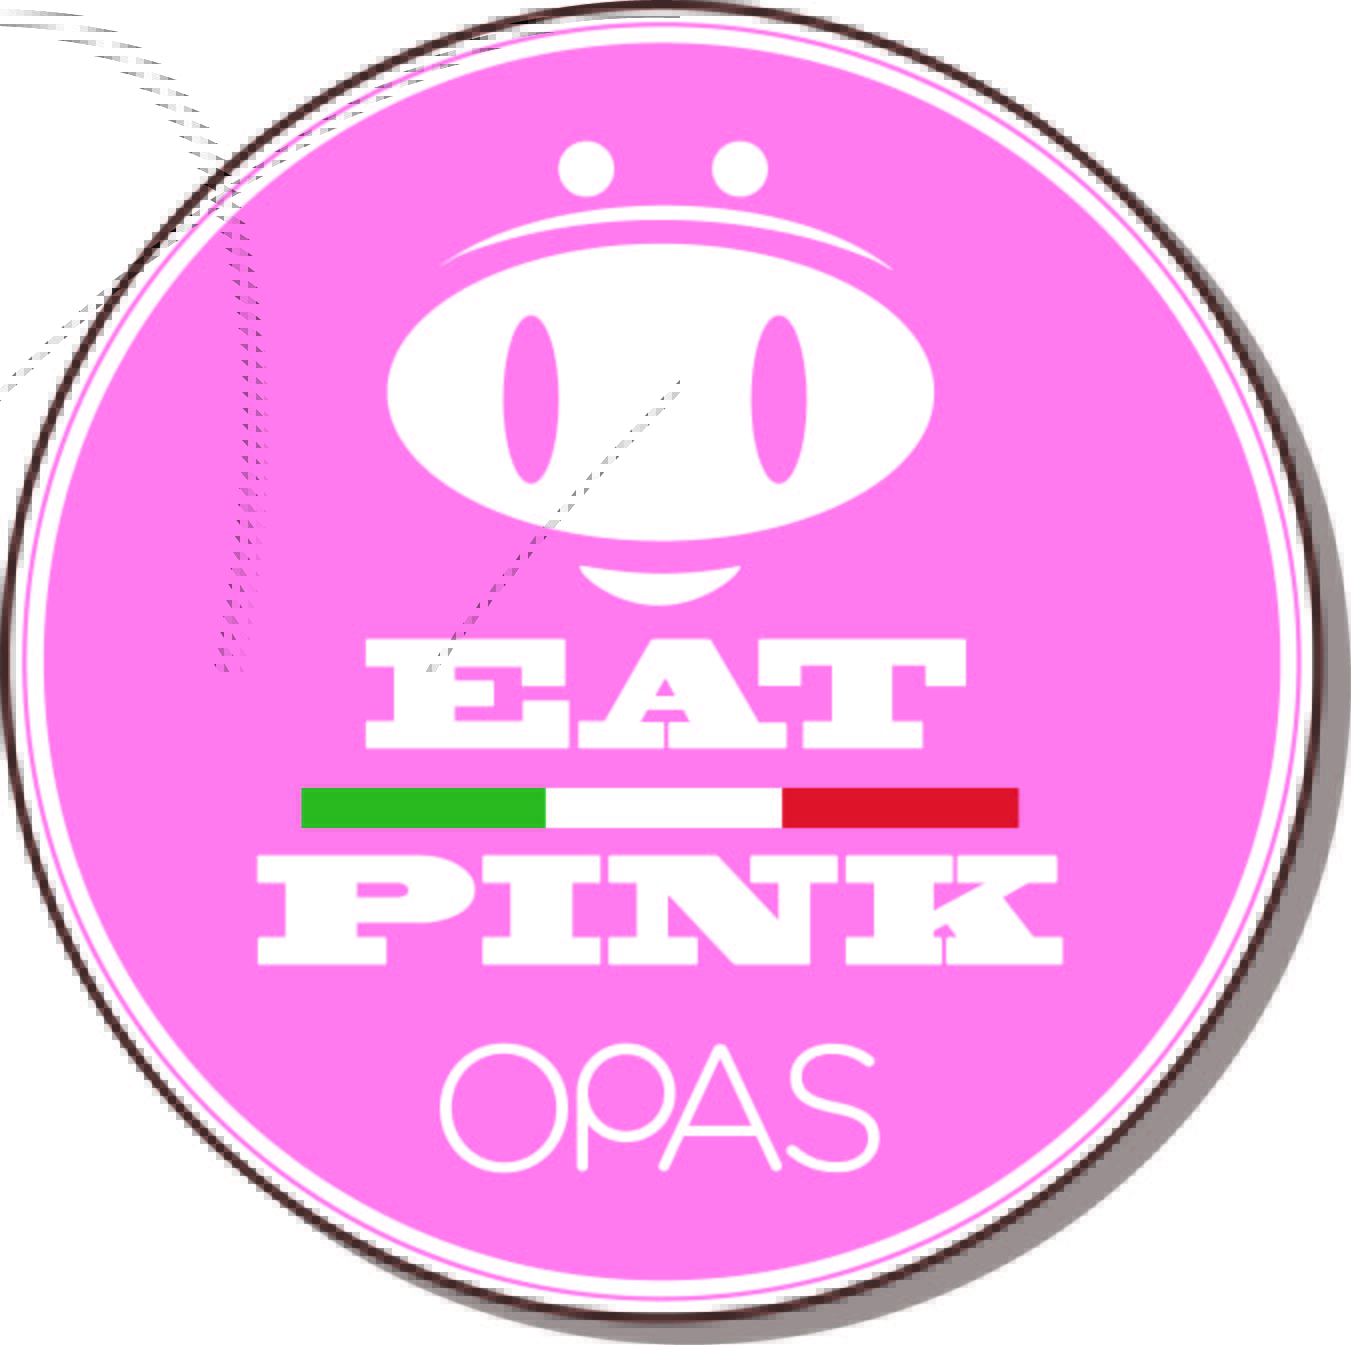 EAT PINK - OPAS